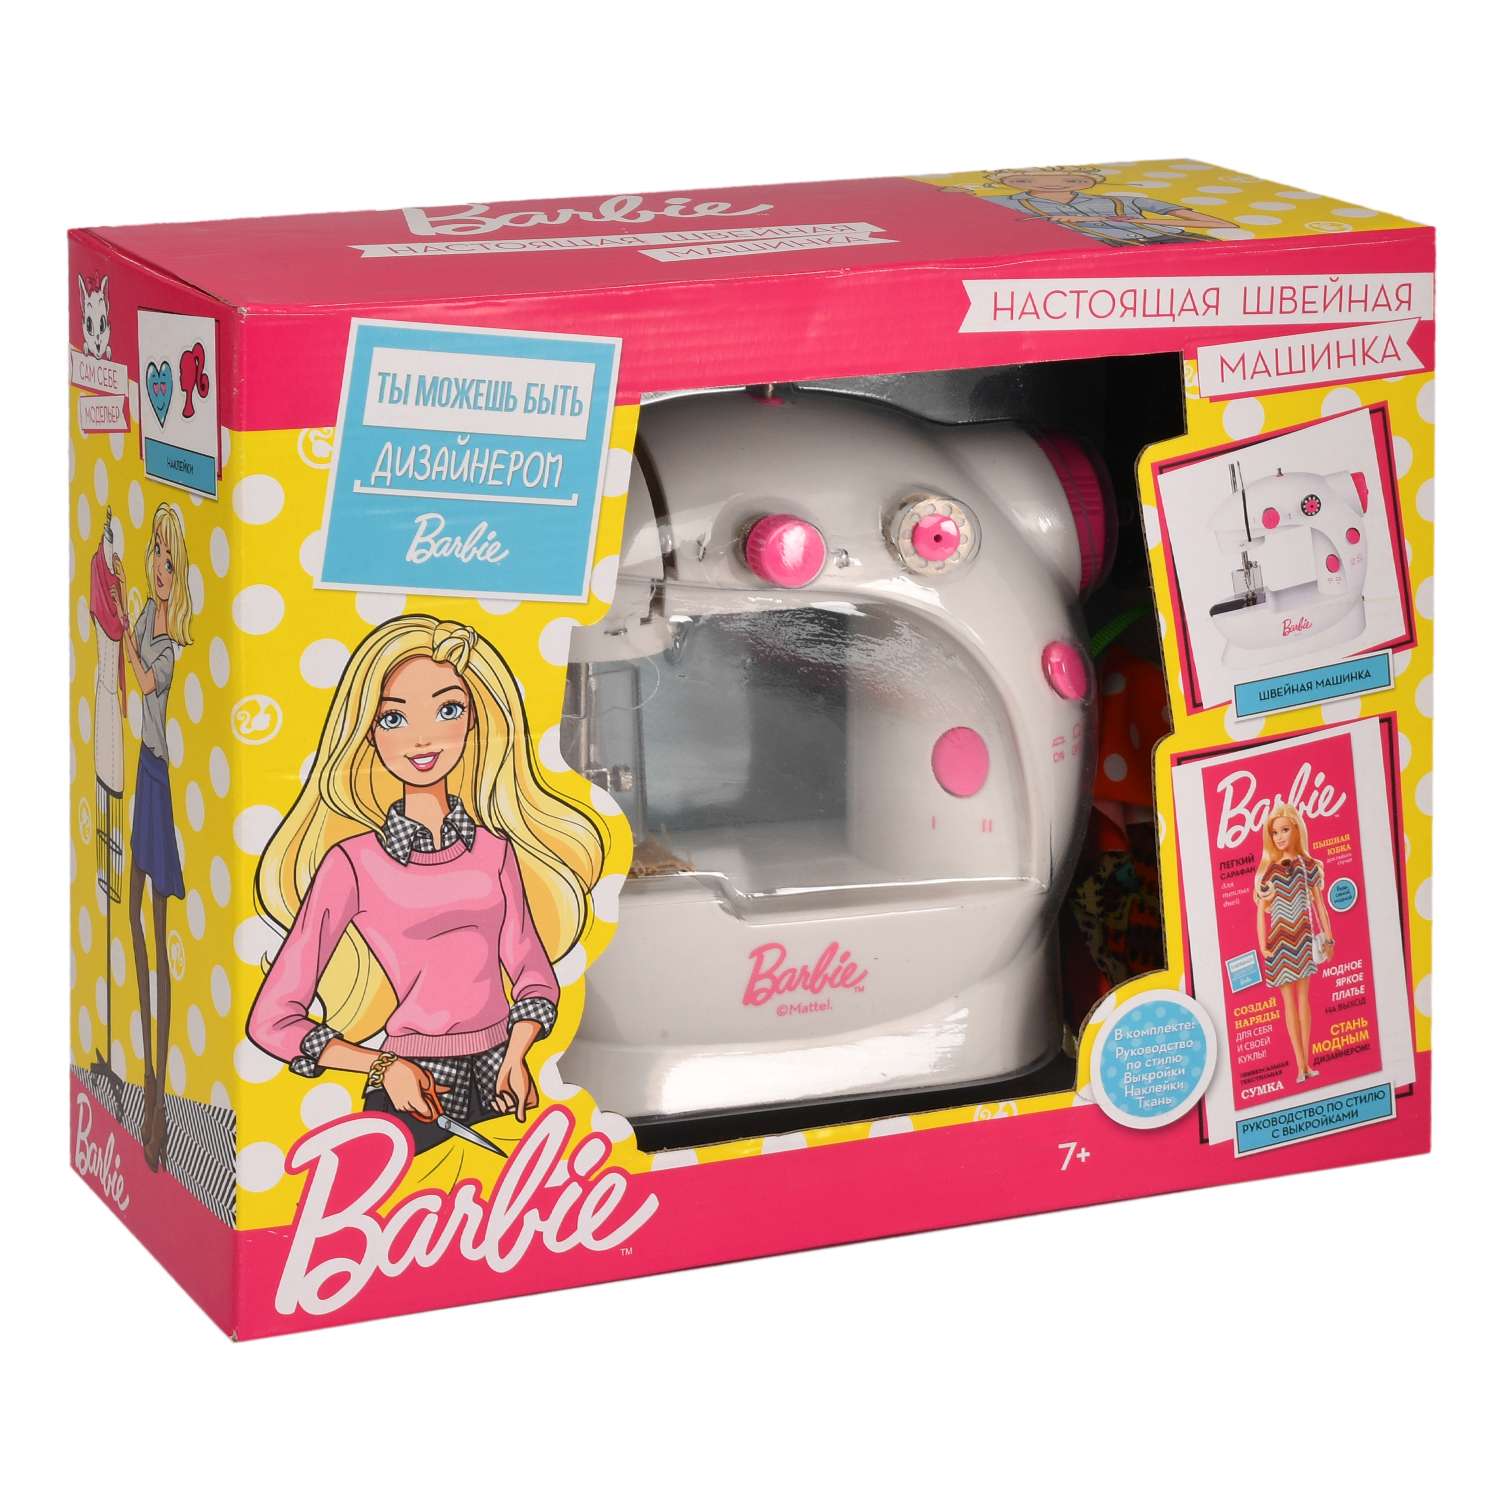 Машинка швейная Barbie с аксессуарами BRB001 - фото 2